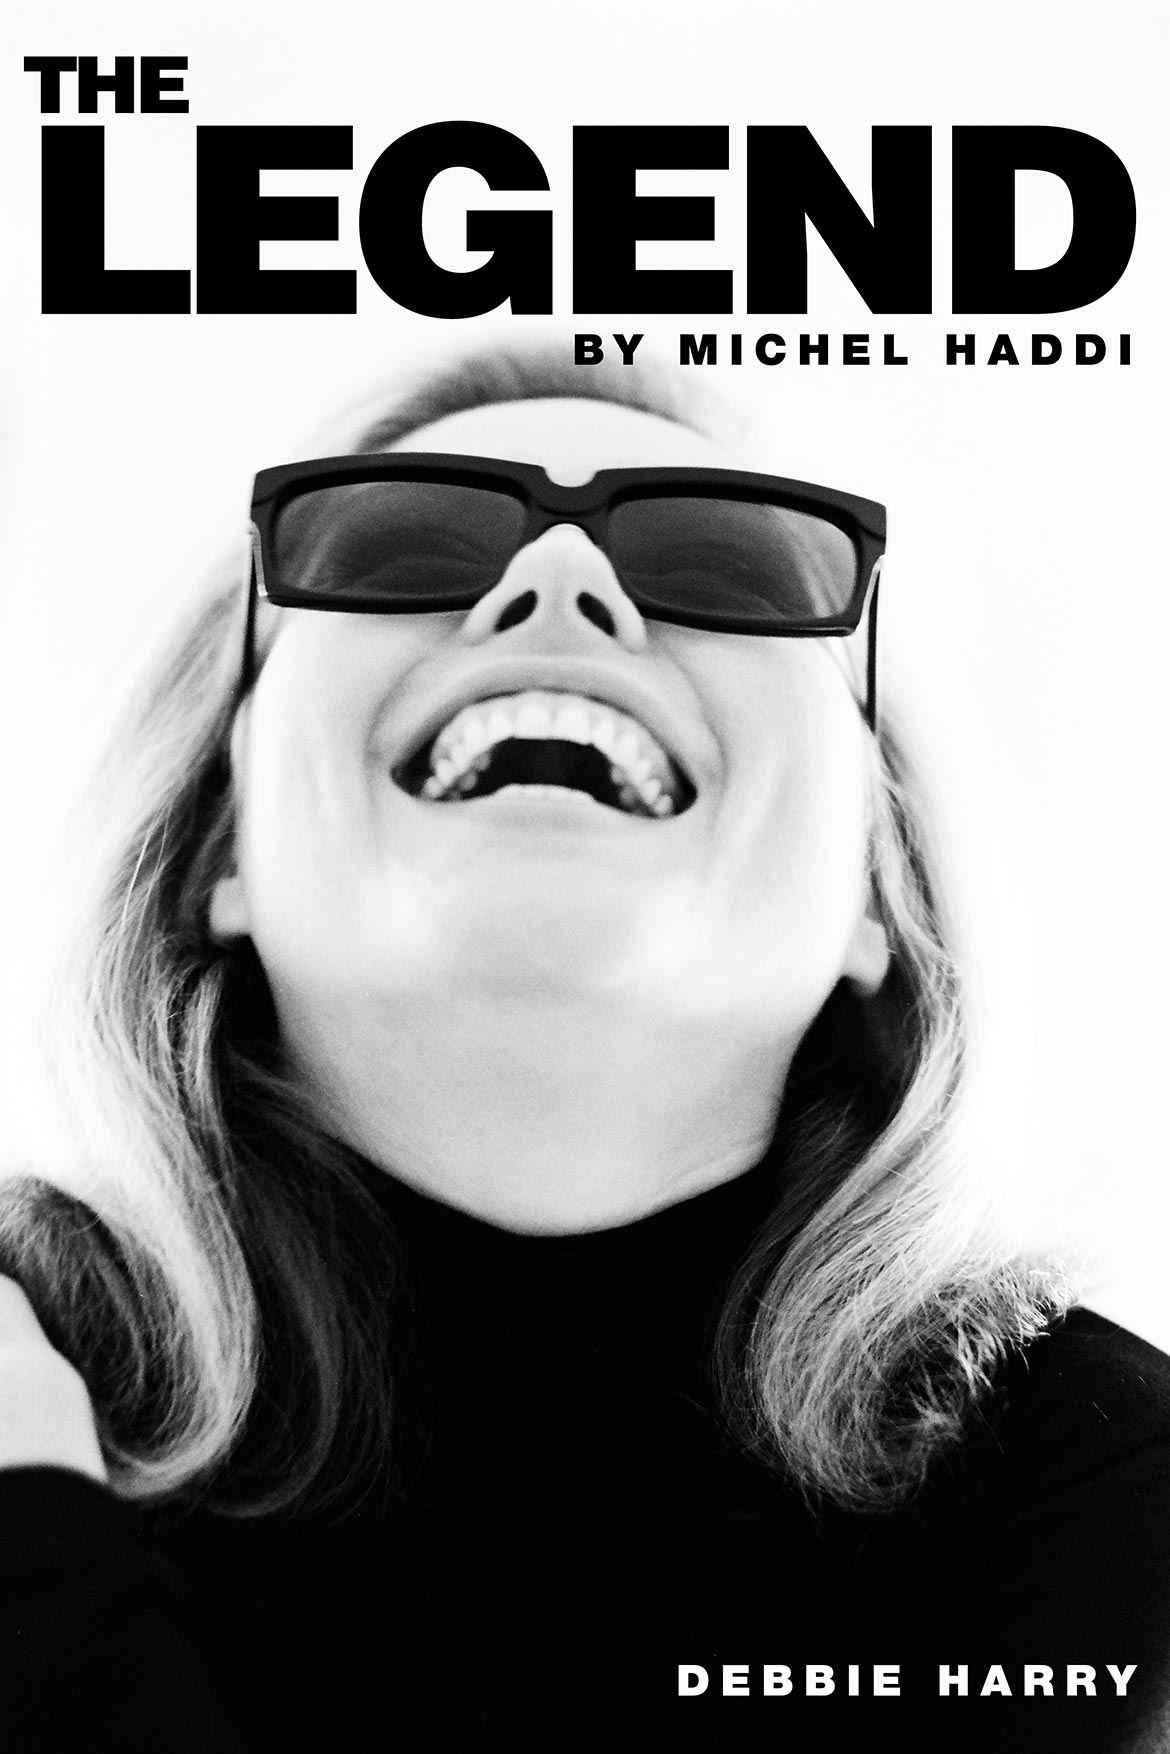 The Legend Debbie Harry by Michel Haddi